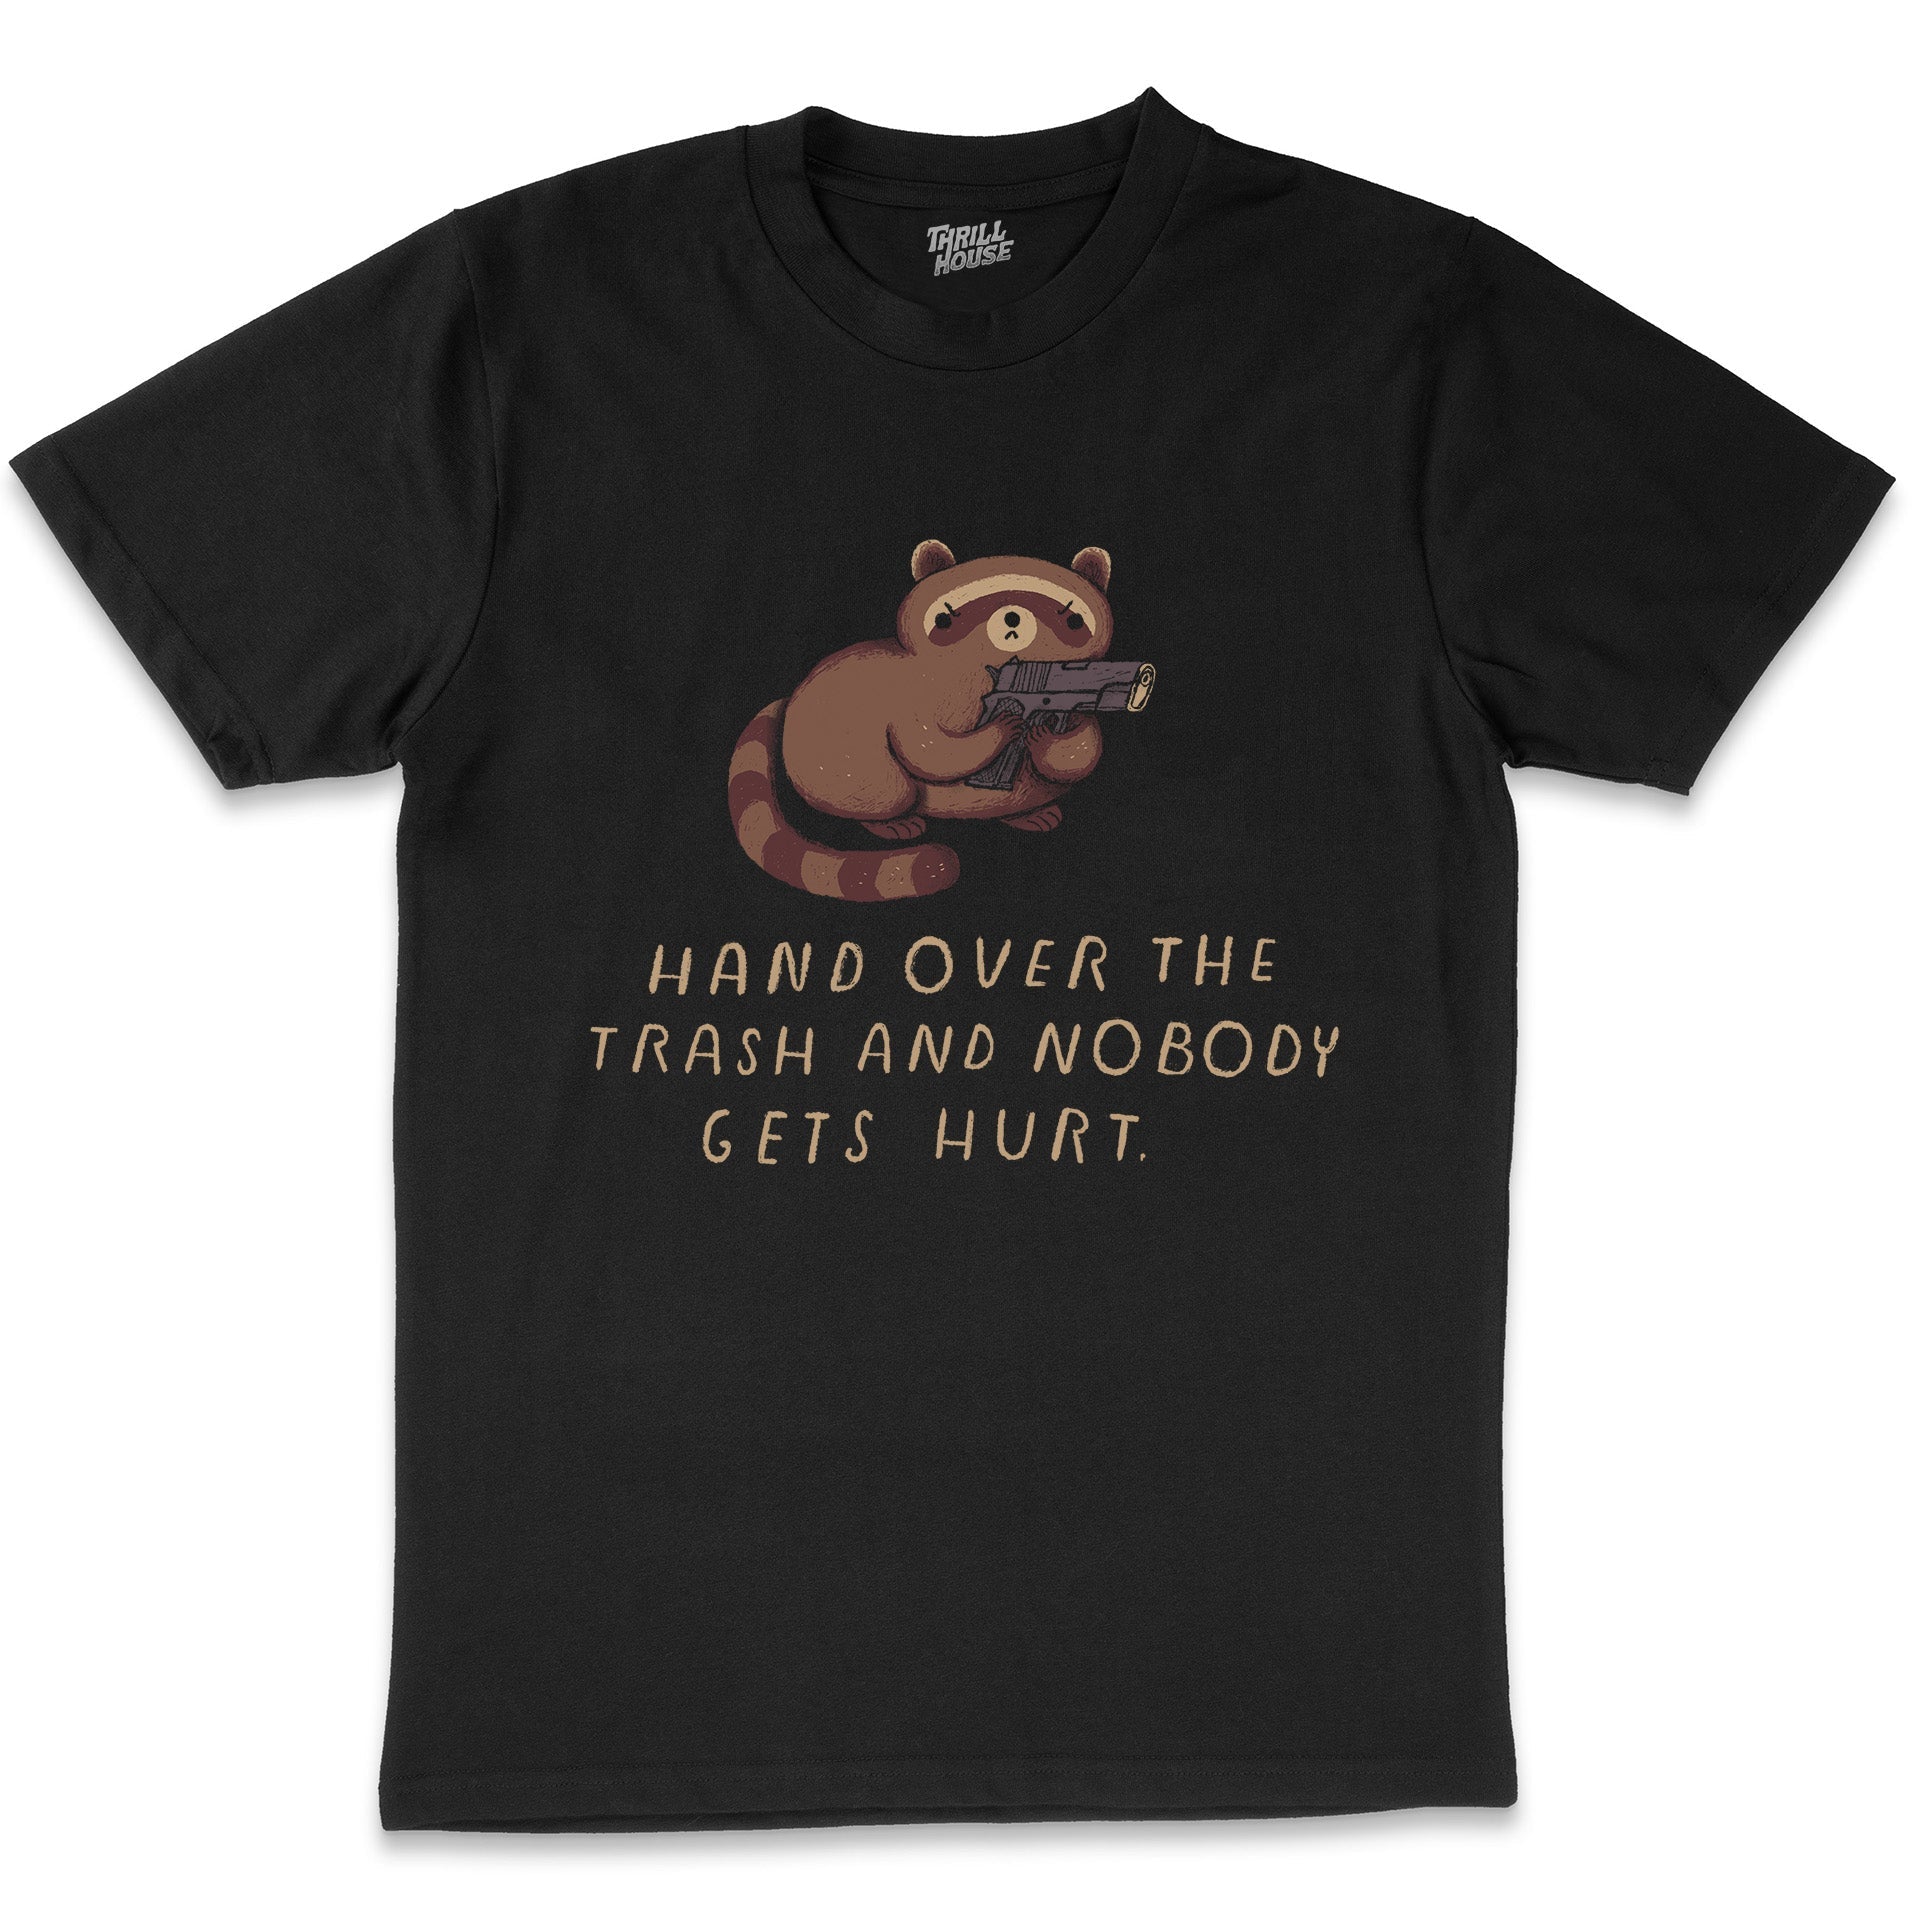 Hand Over the Trash Funny Slogan Raccoon Artsy Woodland Critter Parody Nature Cotton T-Shirt